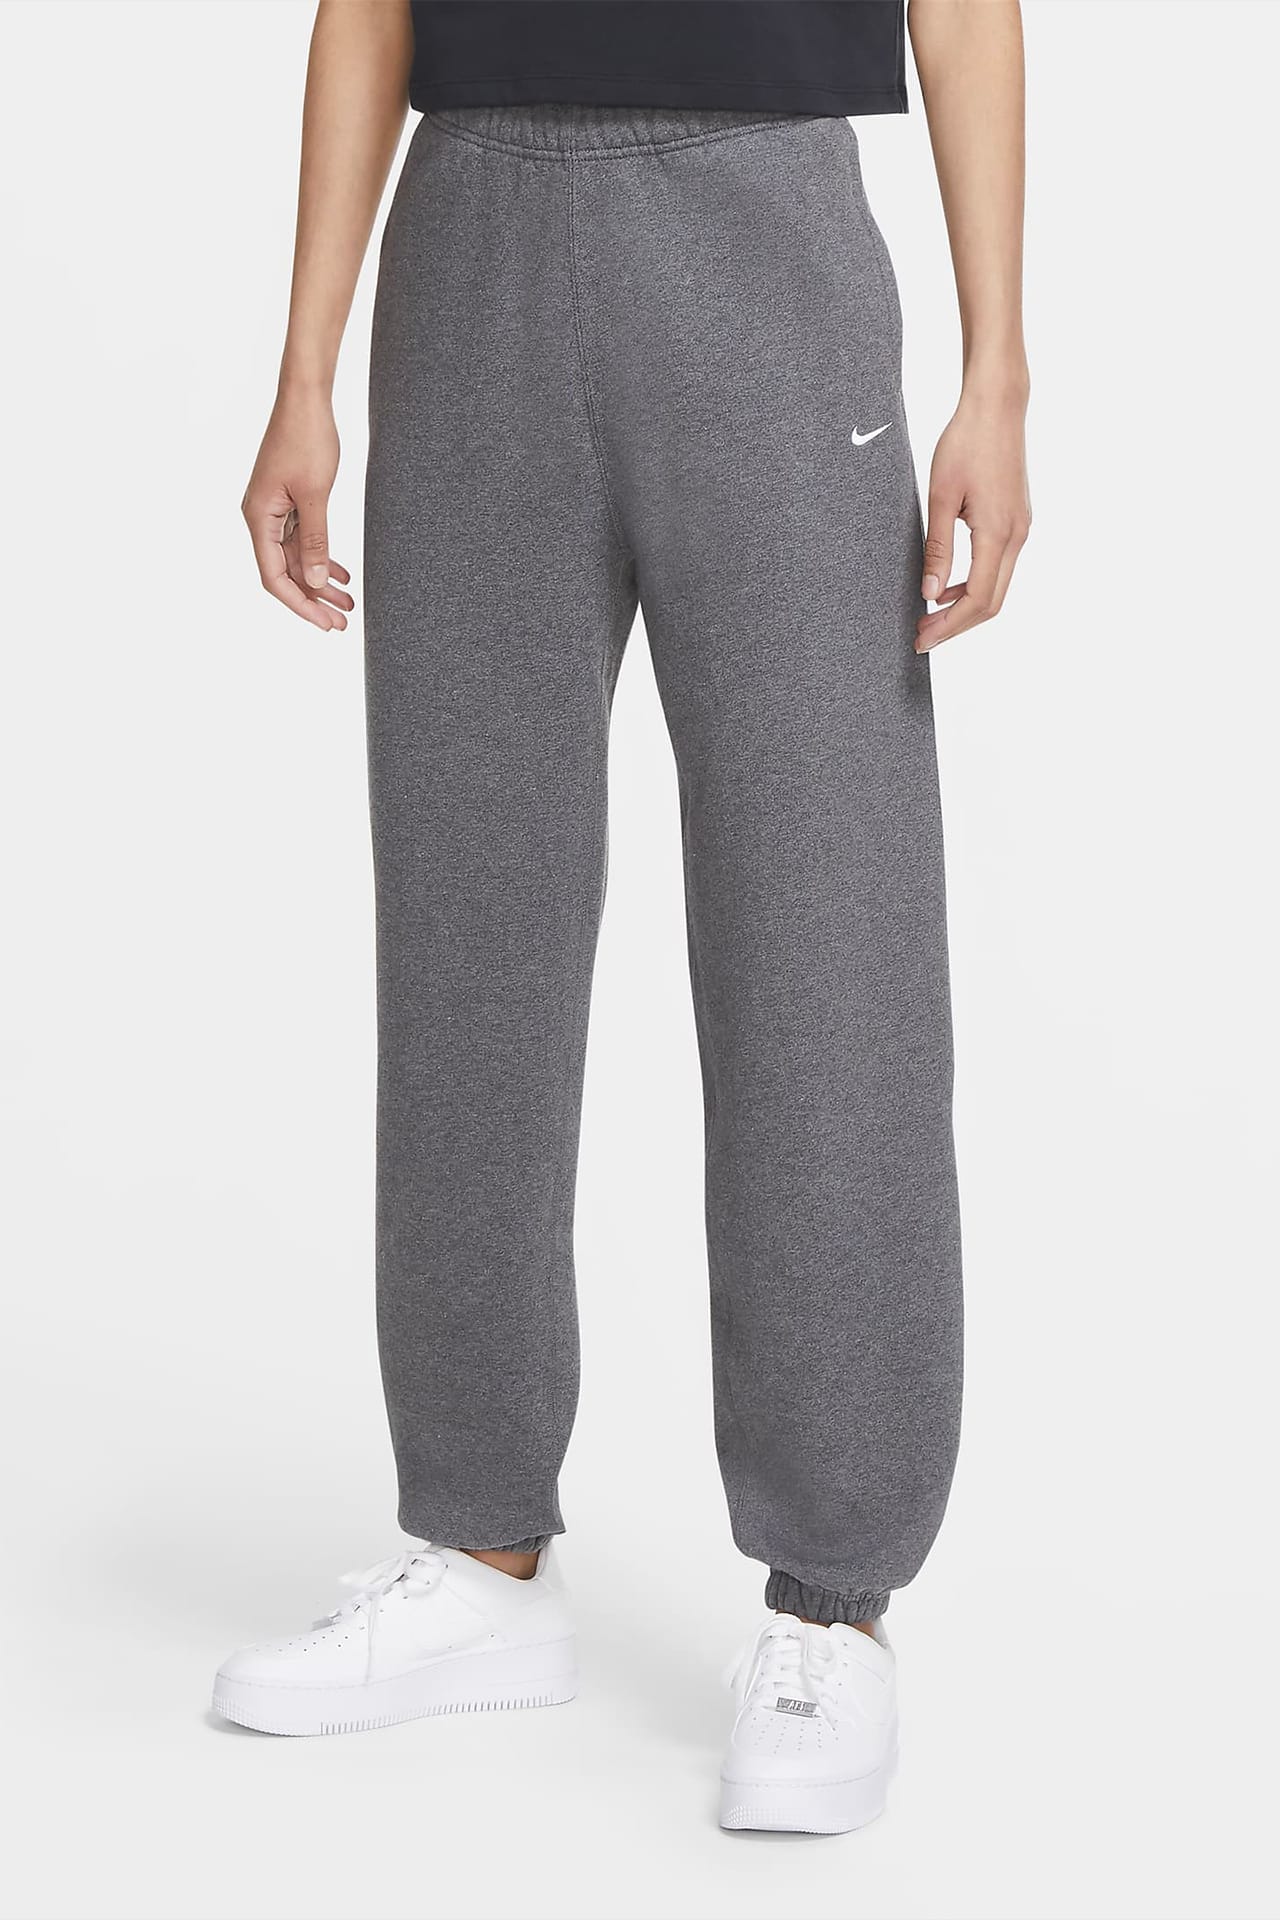 nikelab grey sweatpants